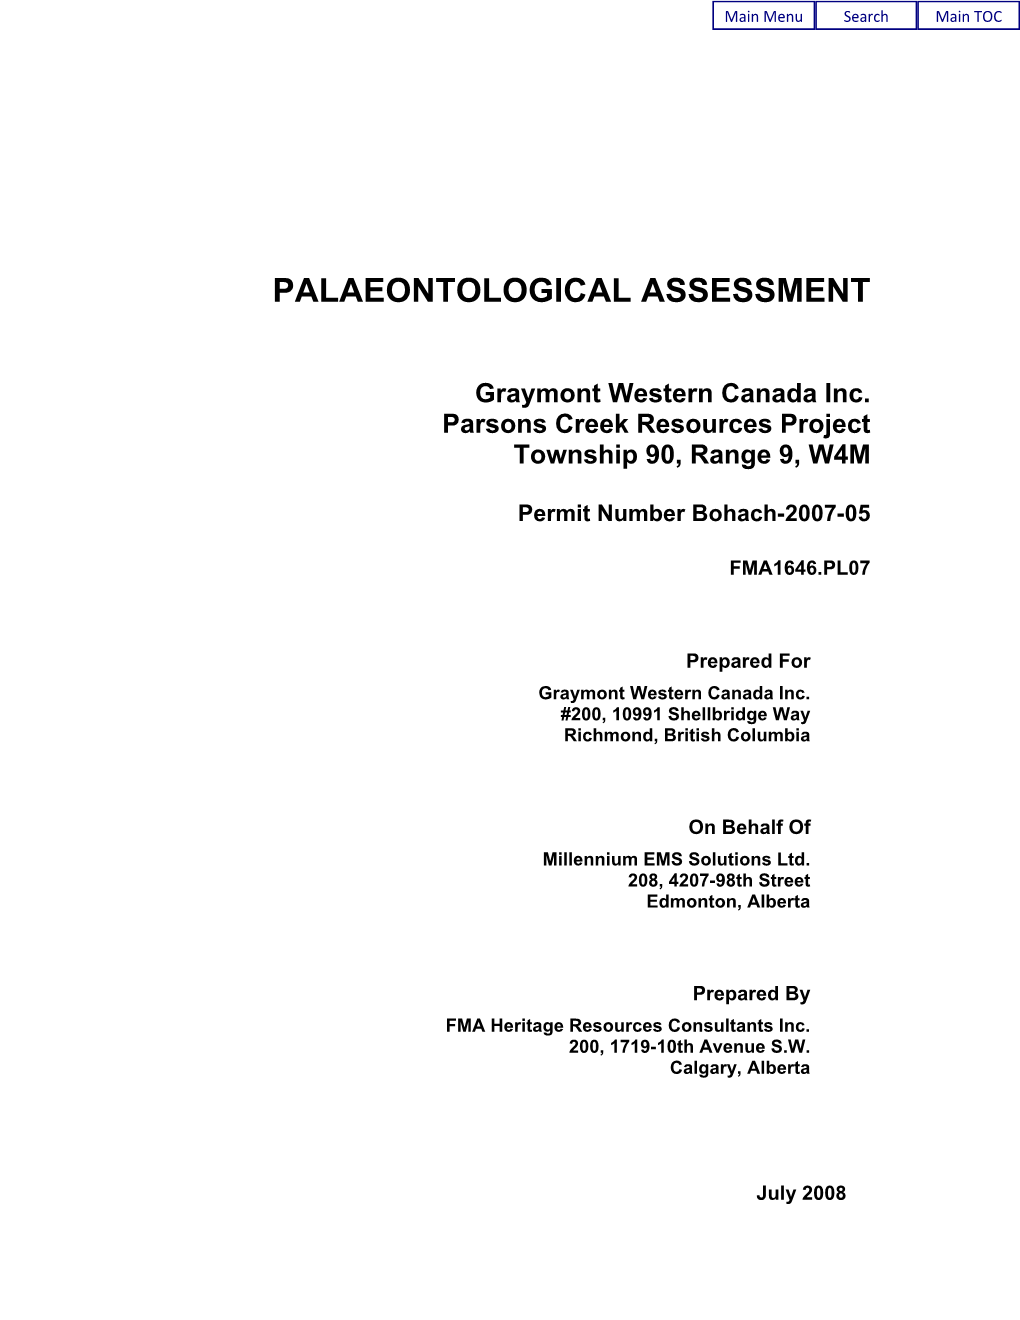 Palaeontological Impact Assessment